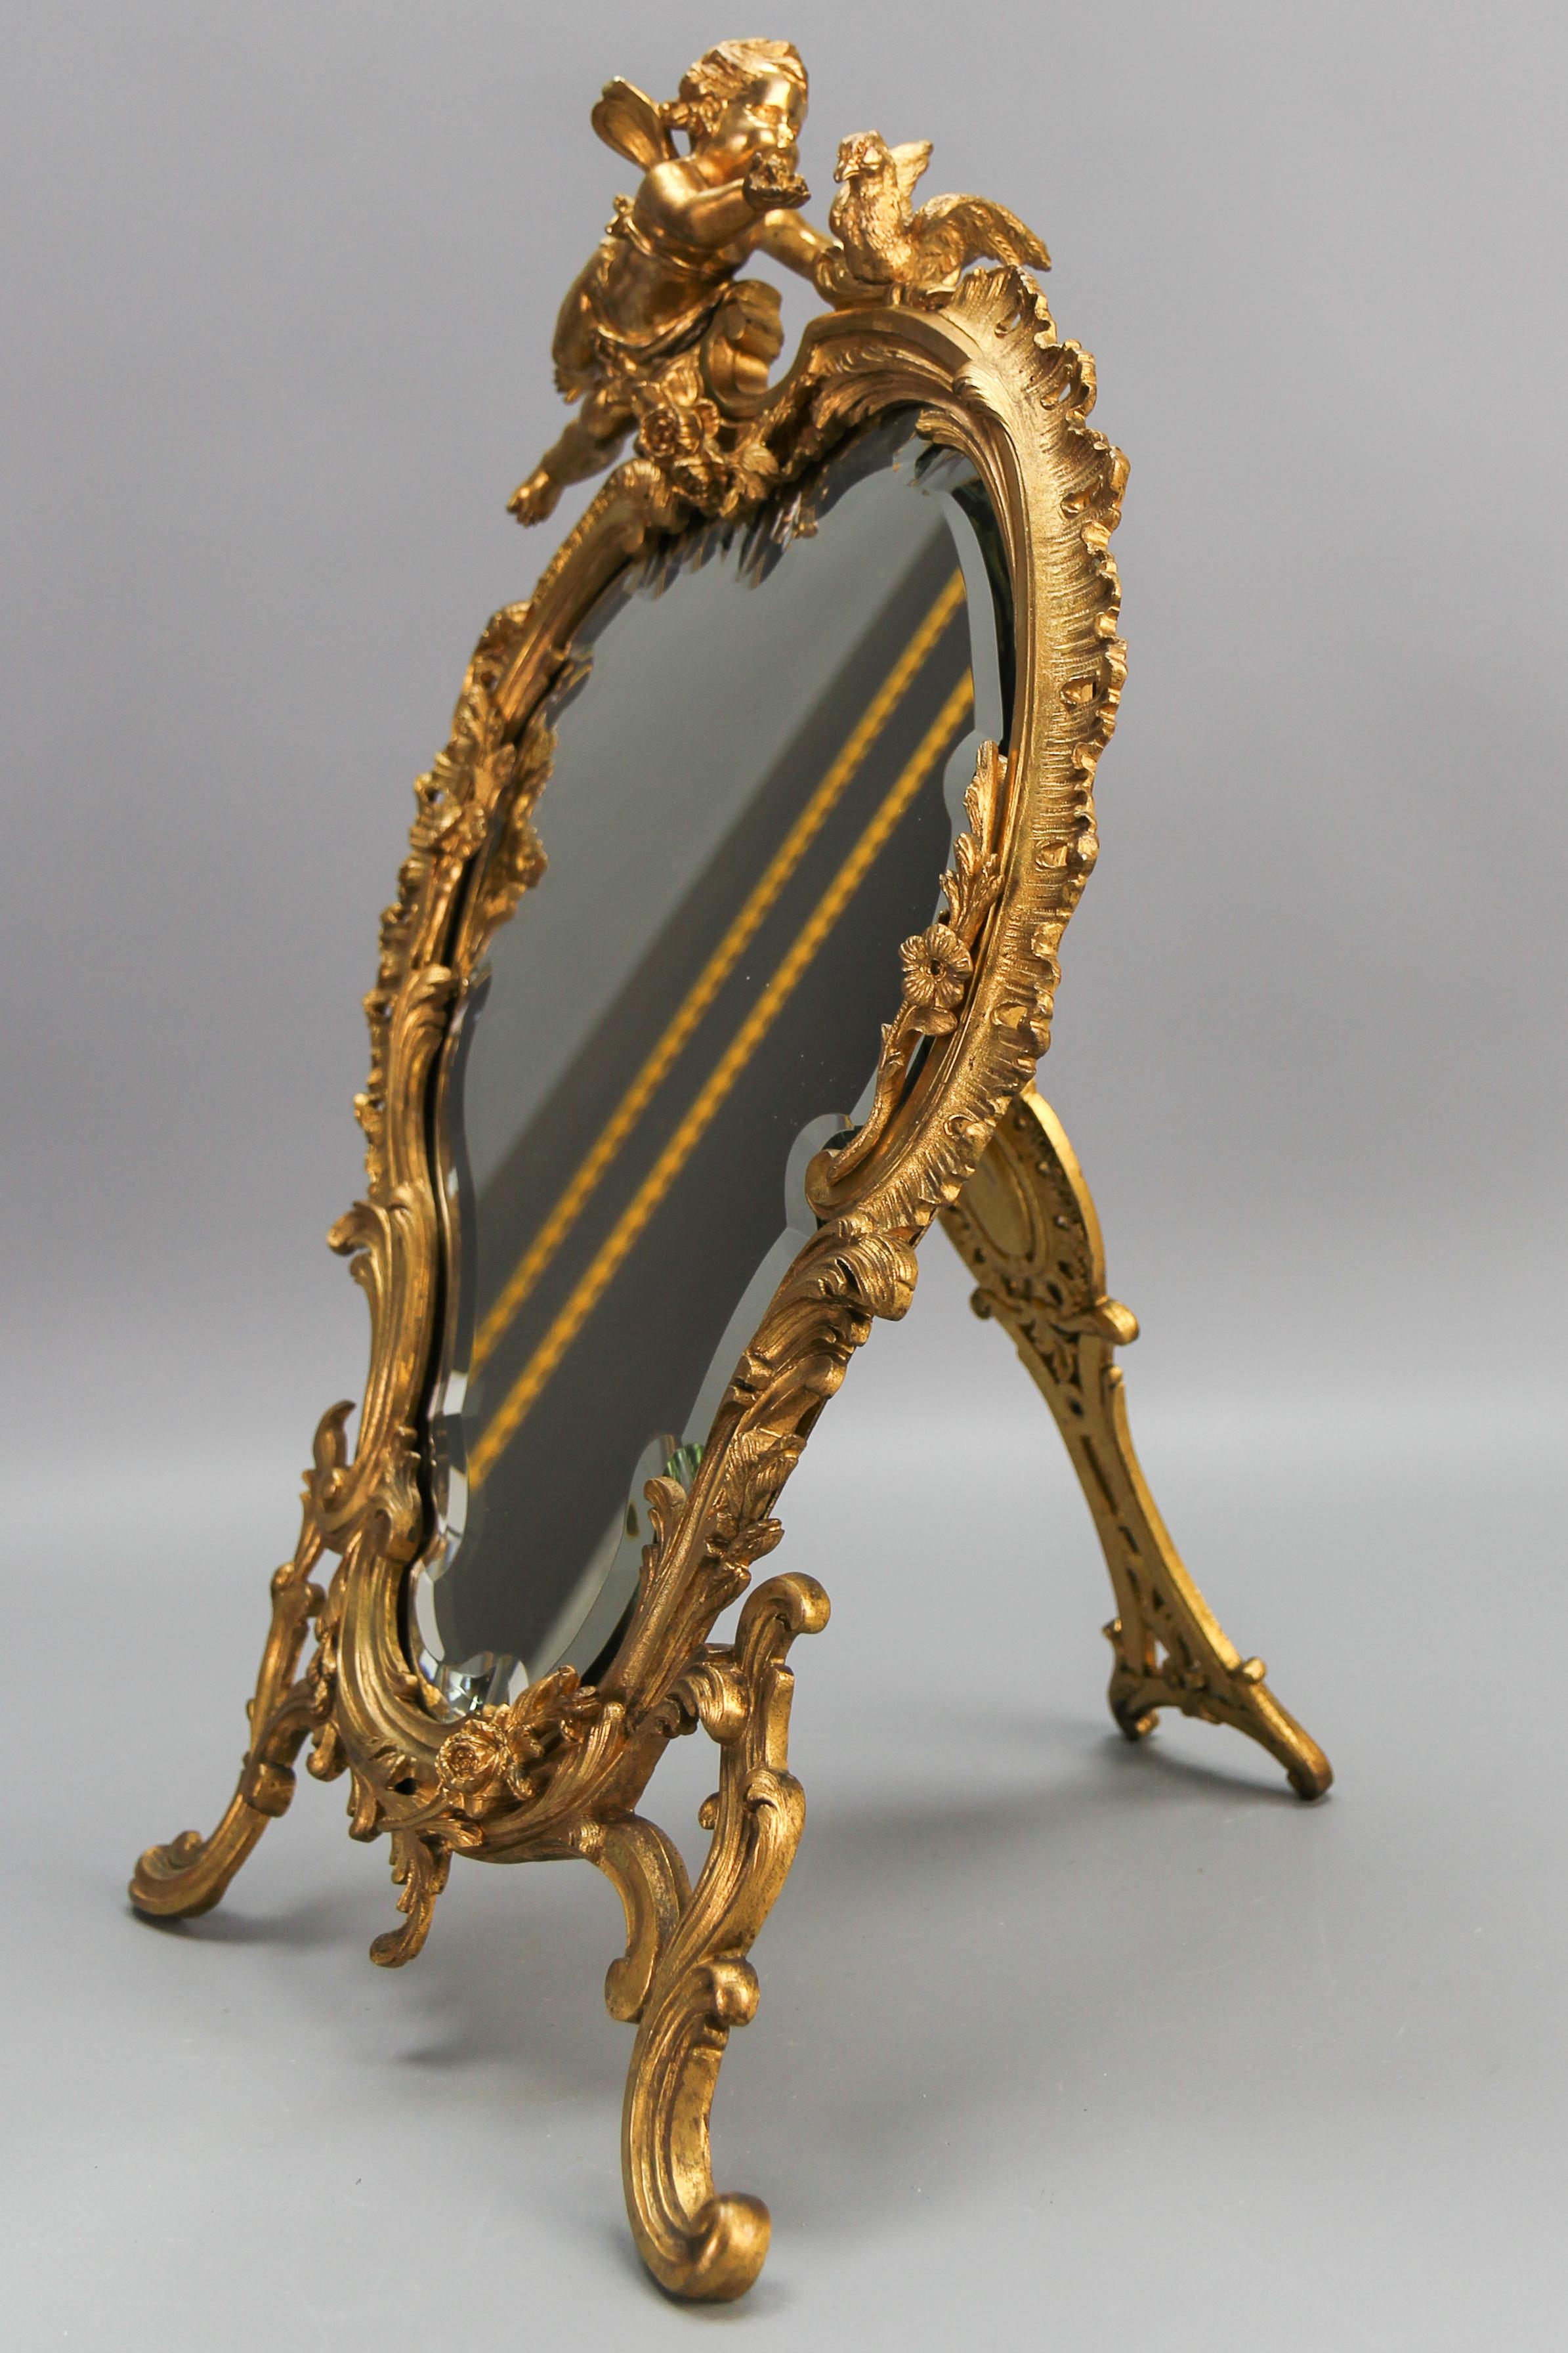 Antique French Gilt Bronze Rococo Style Desktop Mirror with Cherub and Bird For Sale 6